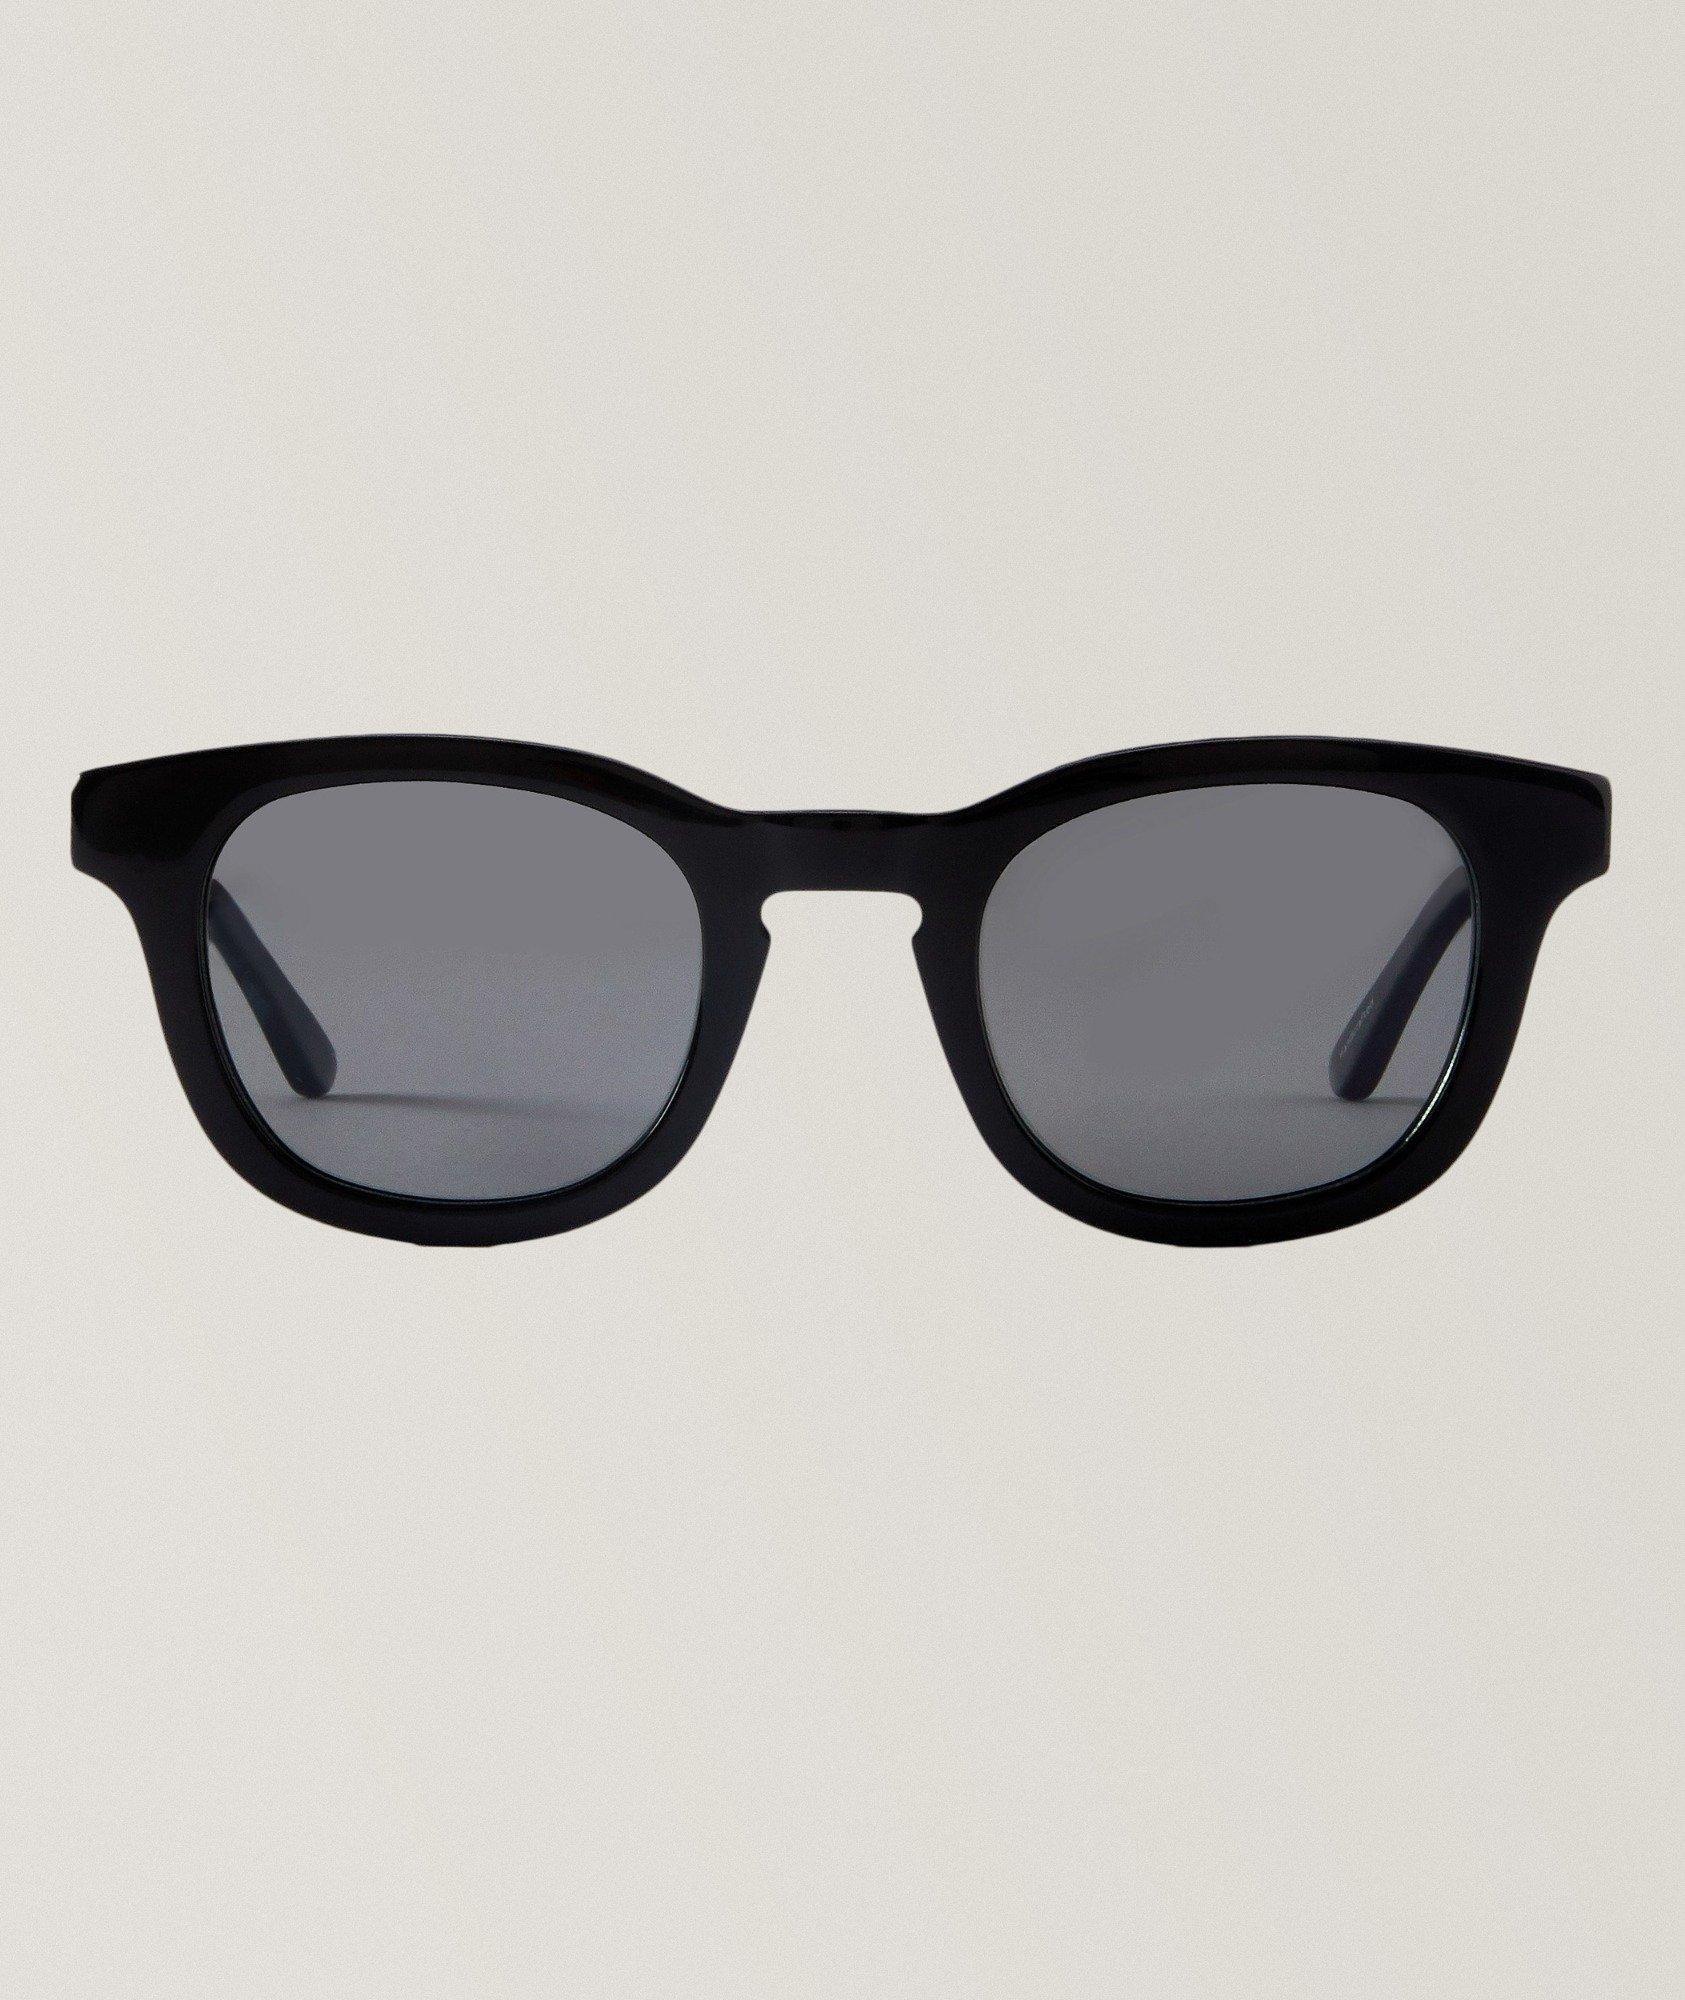 Claude Wayfarer Sunglasses image 1